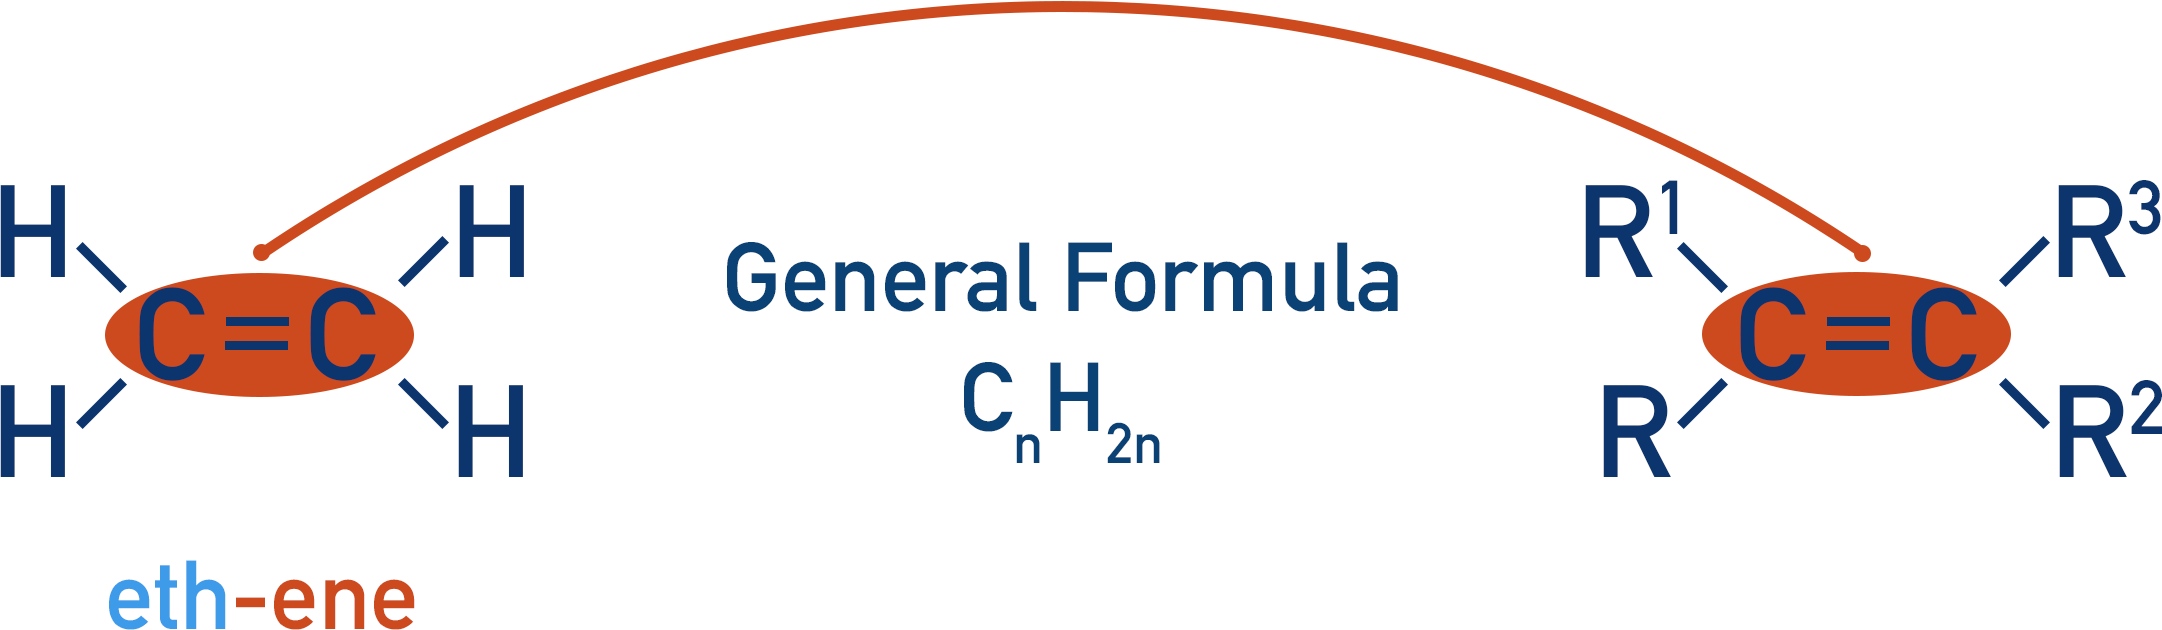 alkene functional group general formula ethene